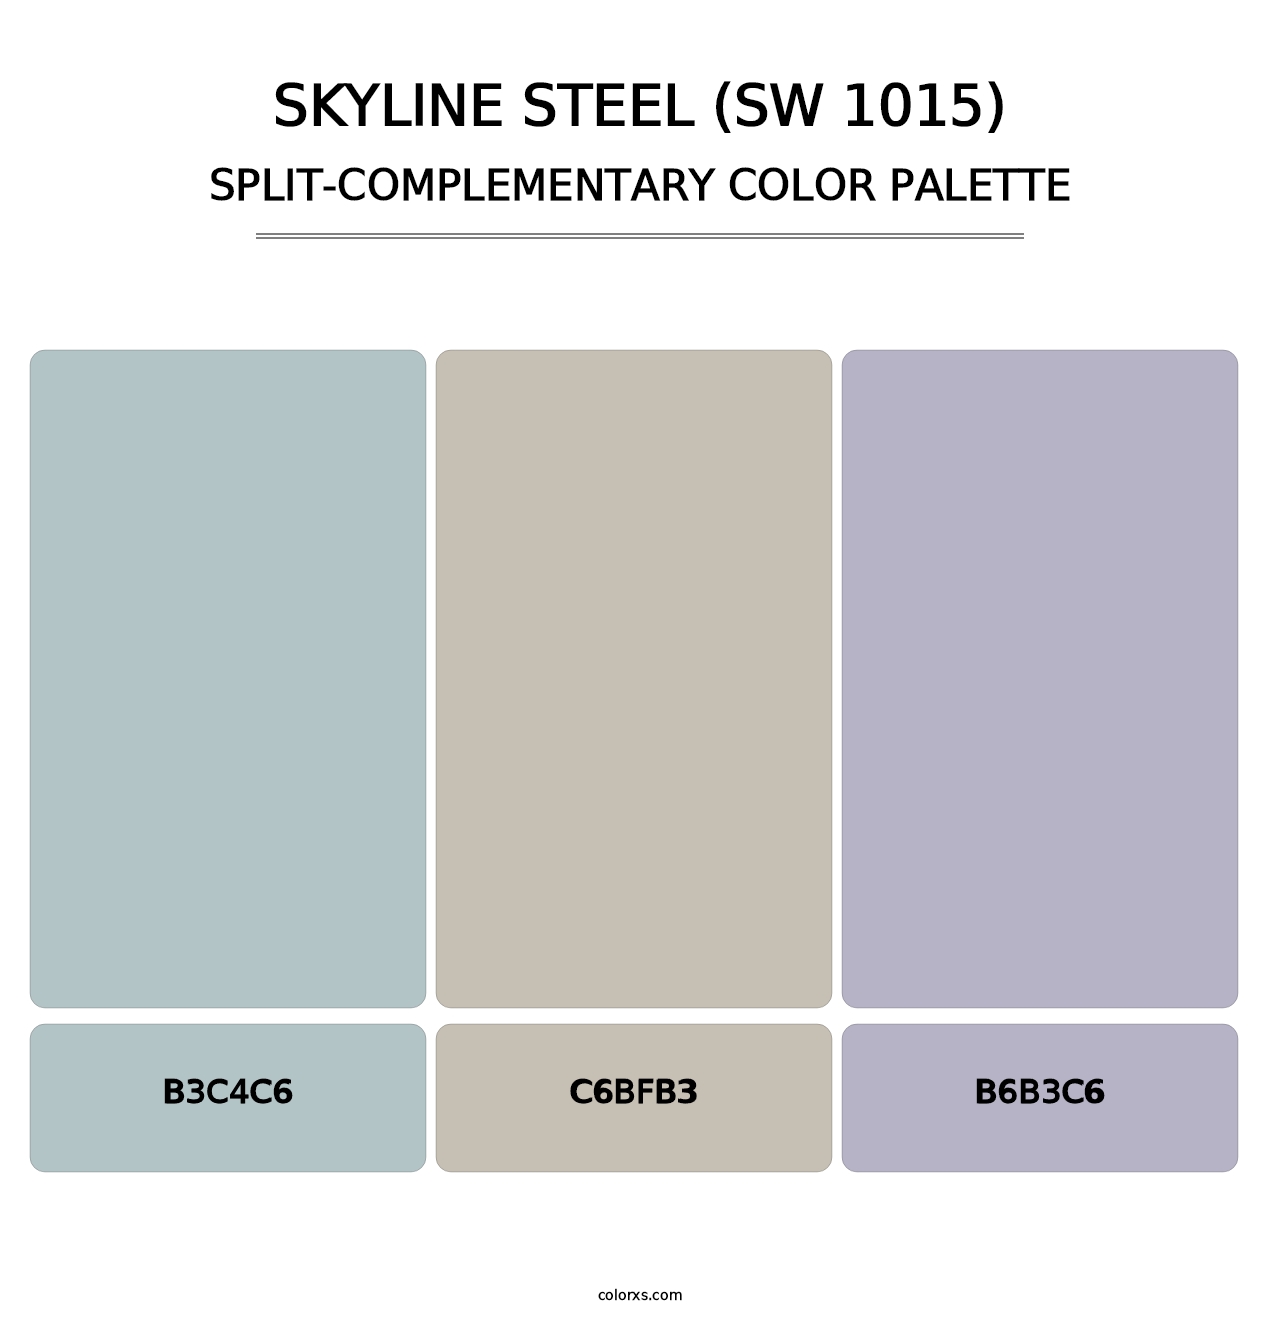 Skyline Steel (SW 1015) - Split-Complementary Color Palette